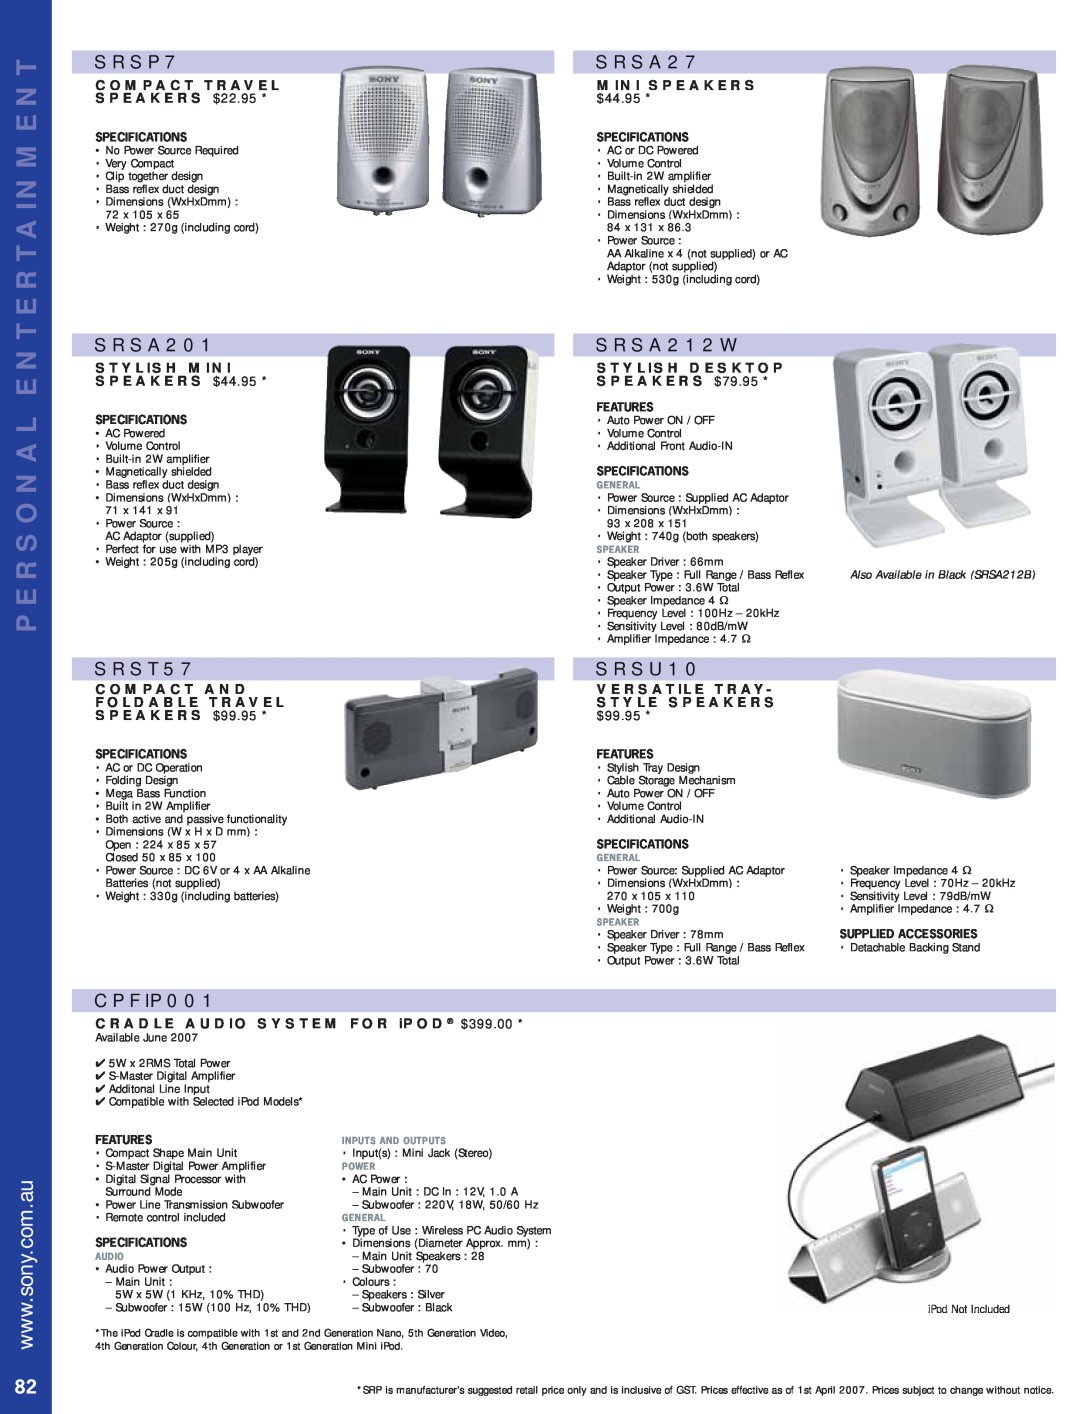 Sony Bravia LCD TV SRSP7, SRSA27, SRSA201, SRSA212W, SRST57, SRSU10, CPFIP001, Entertainment, Personal, Mini Speakers 